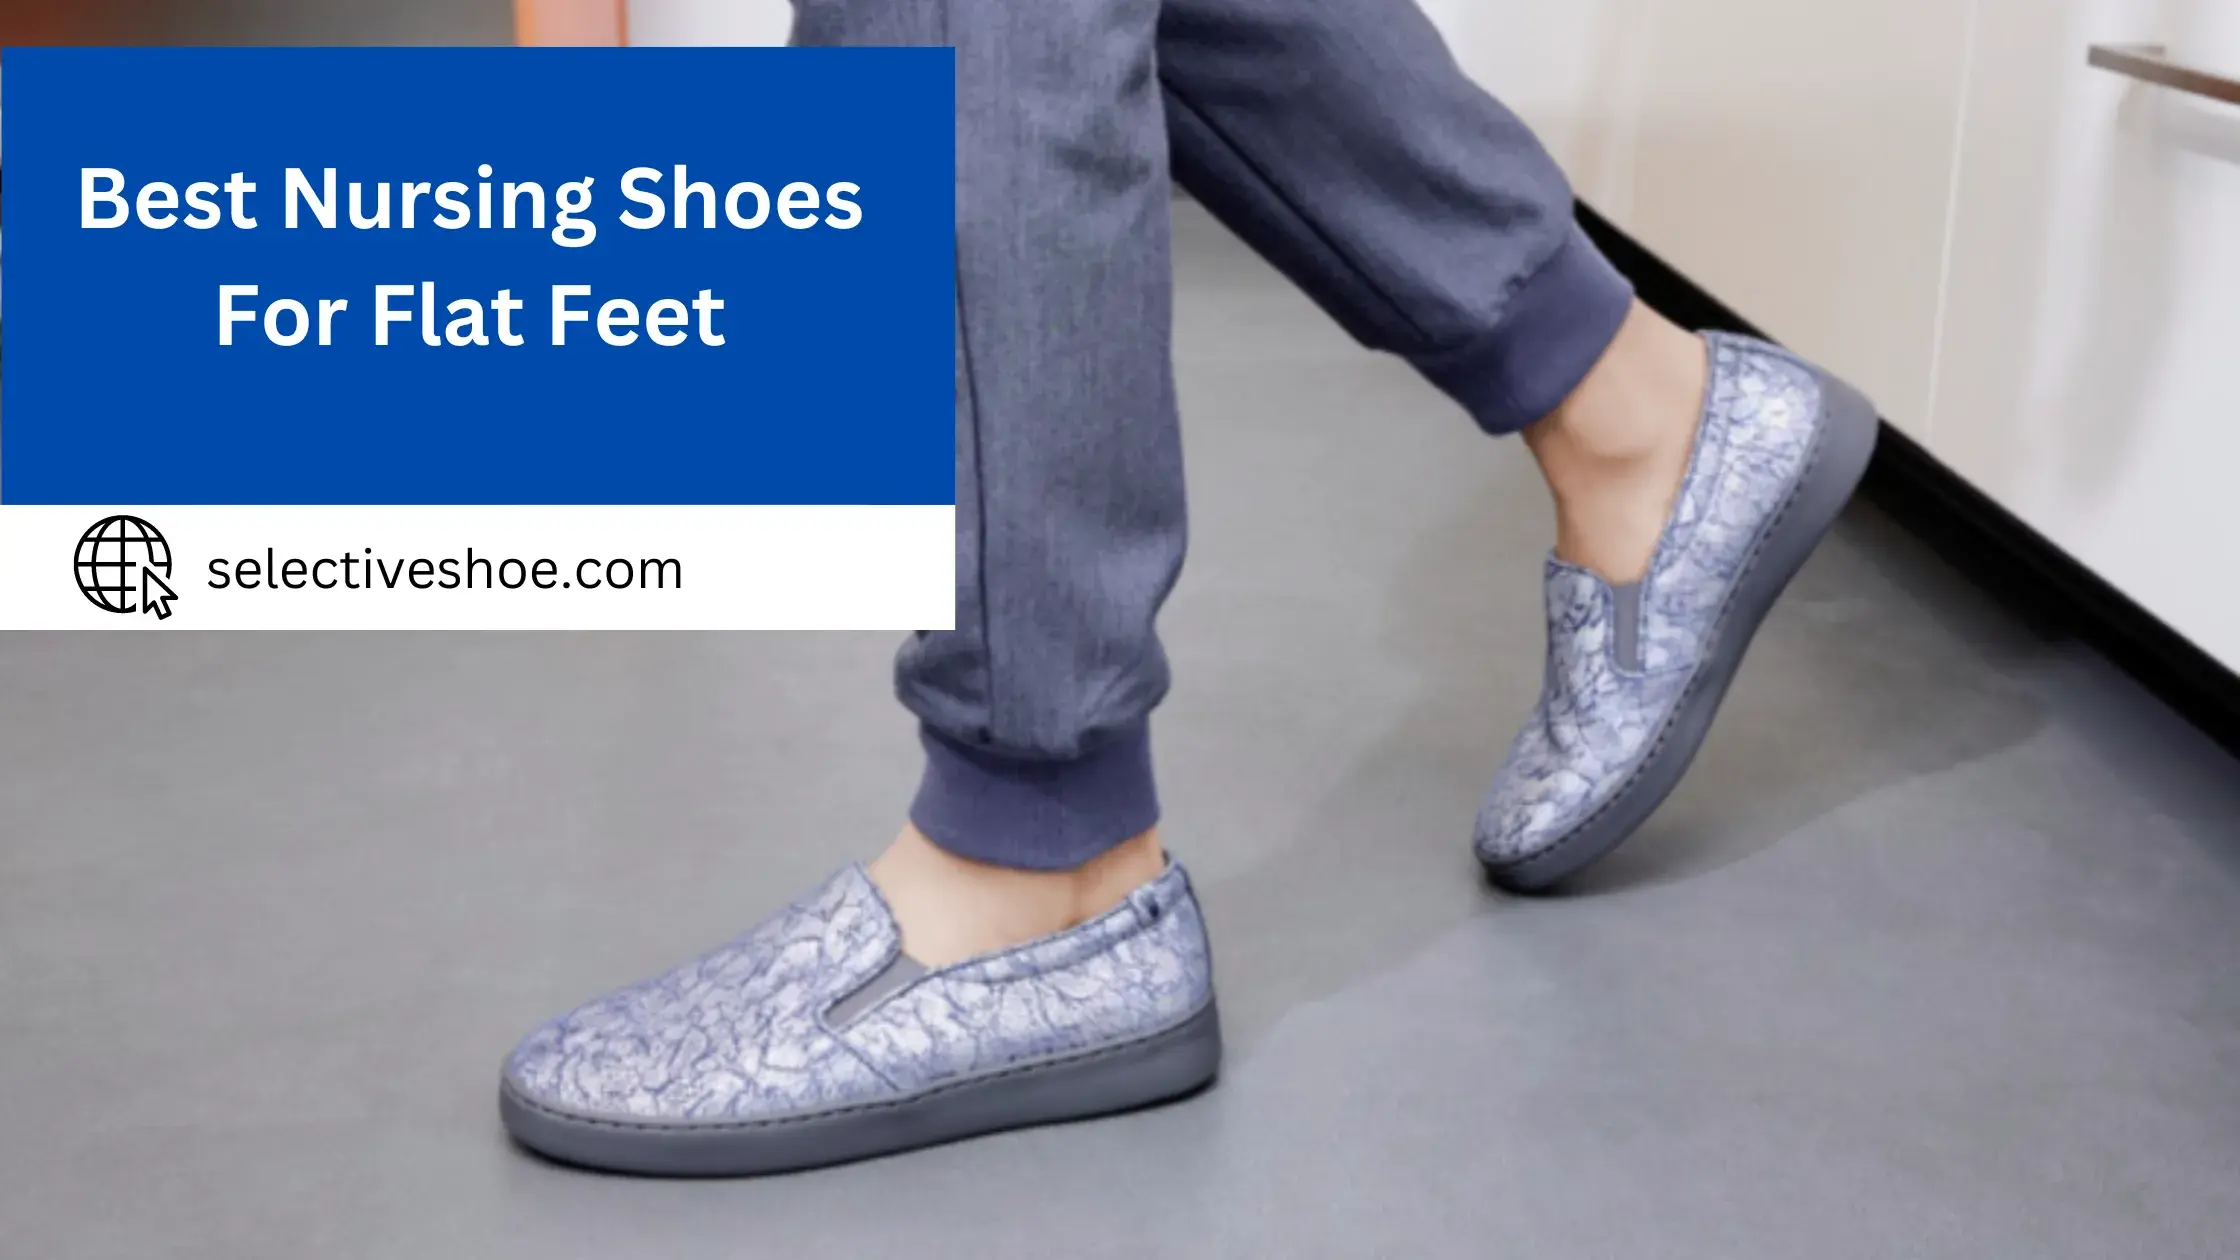 Best Nursing Shoes For Flat Feet - (An In-Depth Guide)